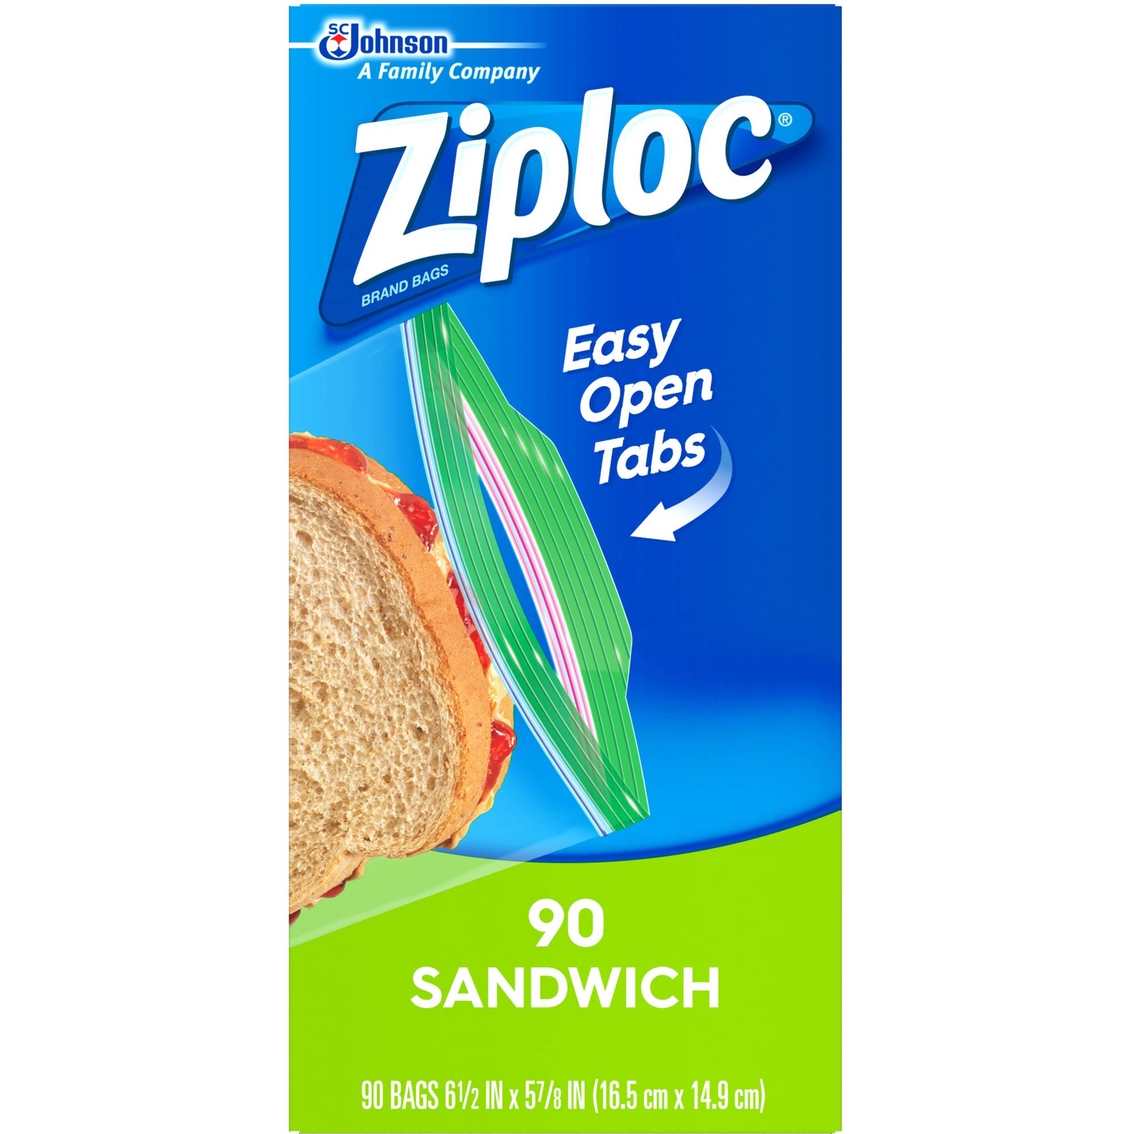 Ziploc Sandwich Bags - Image 2 of 2